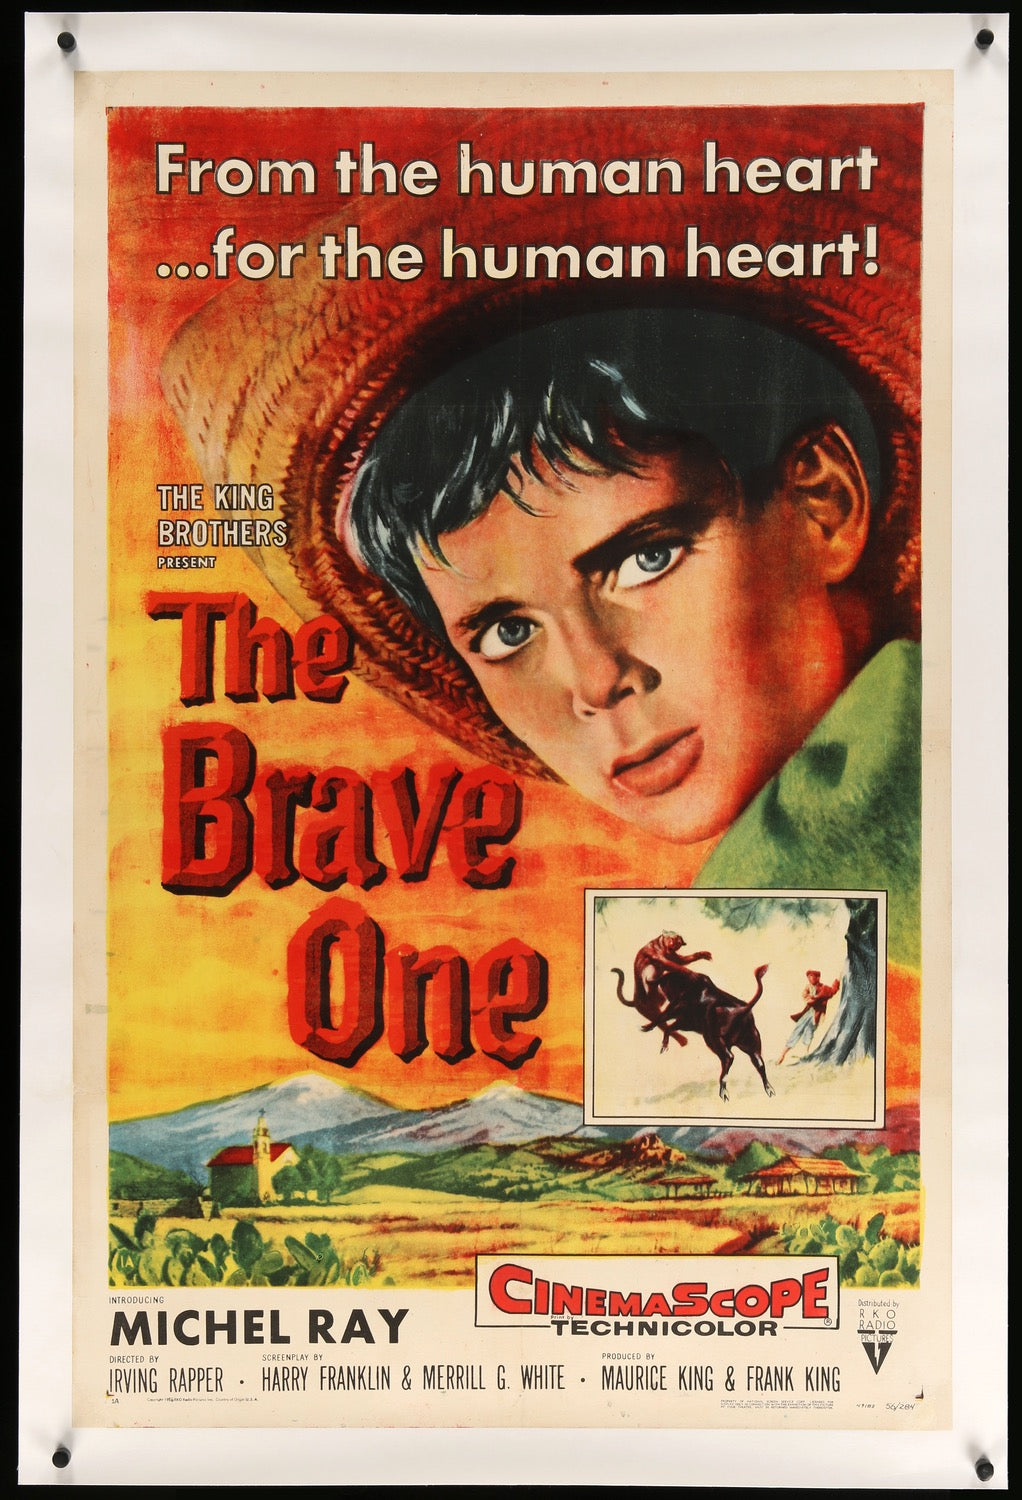 The Brave One (RKO, 1956). Half Sheet (22 X 28) Style A. Drama